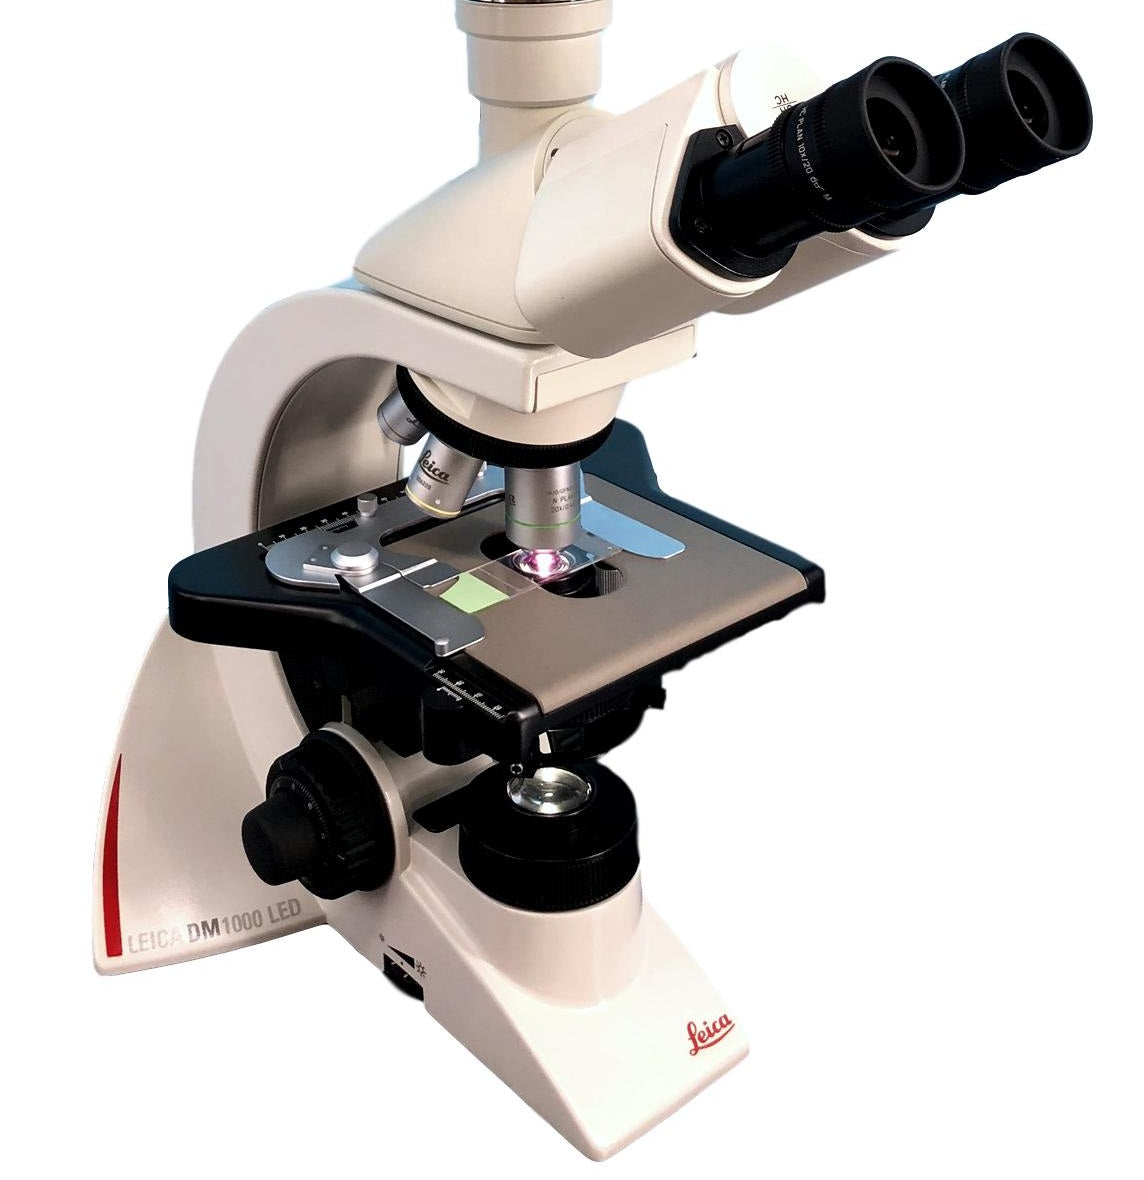 Leica DM1000 Dermatology MOHS Microscope